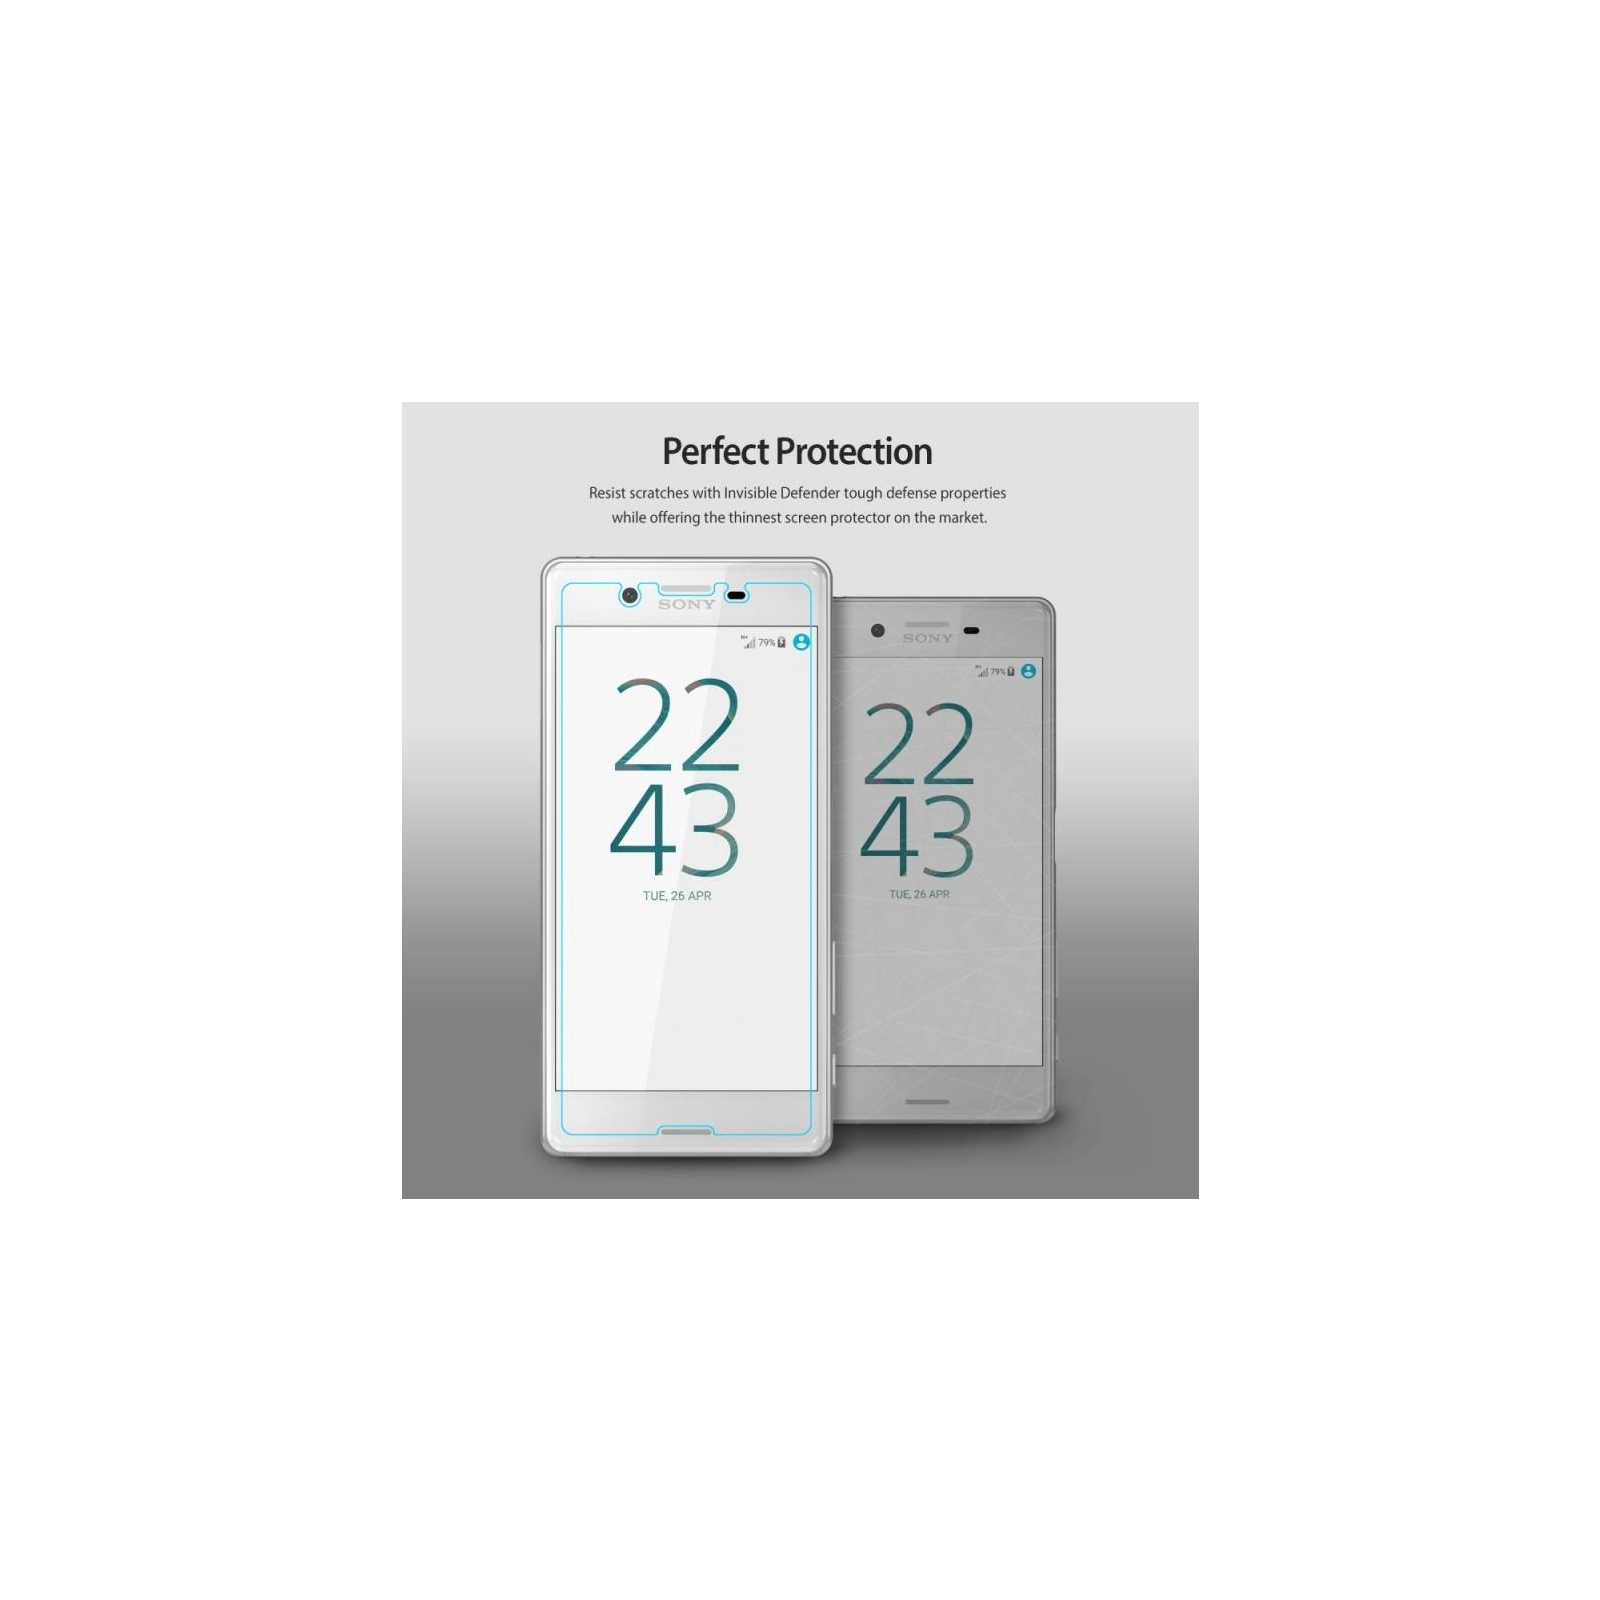 Пленка защитная Ringke для телефона Sony Xperia X / X Performance (RSP4469) изображение 3